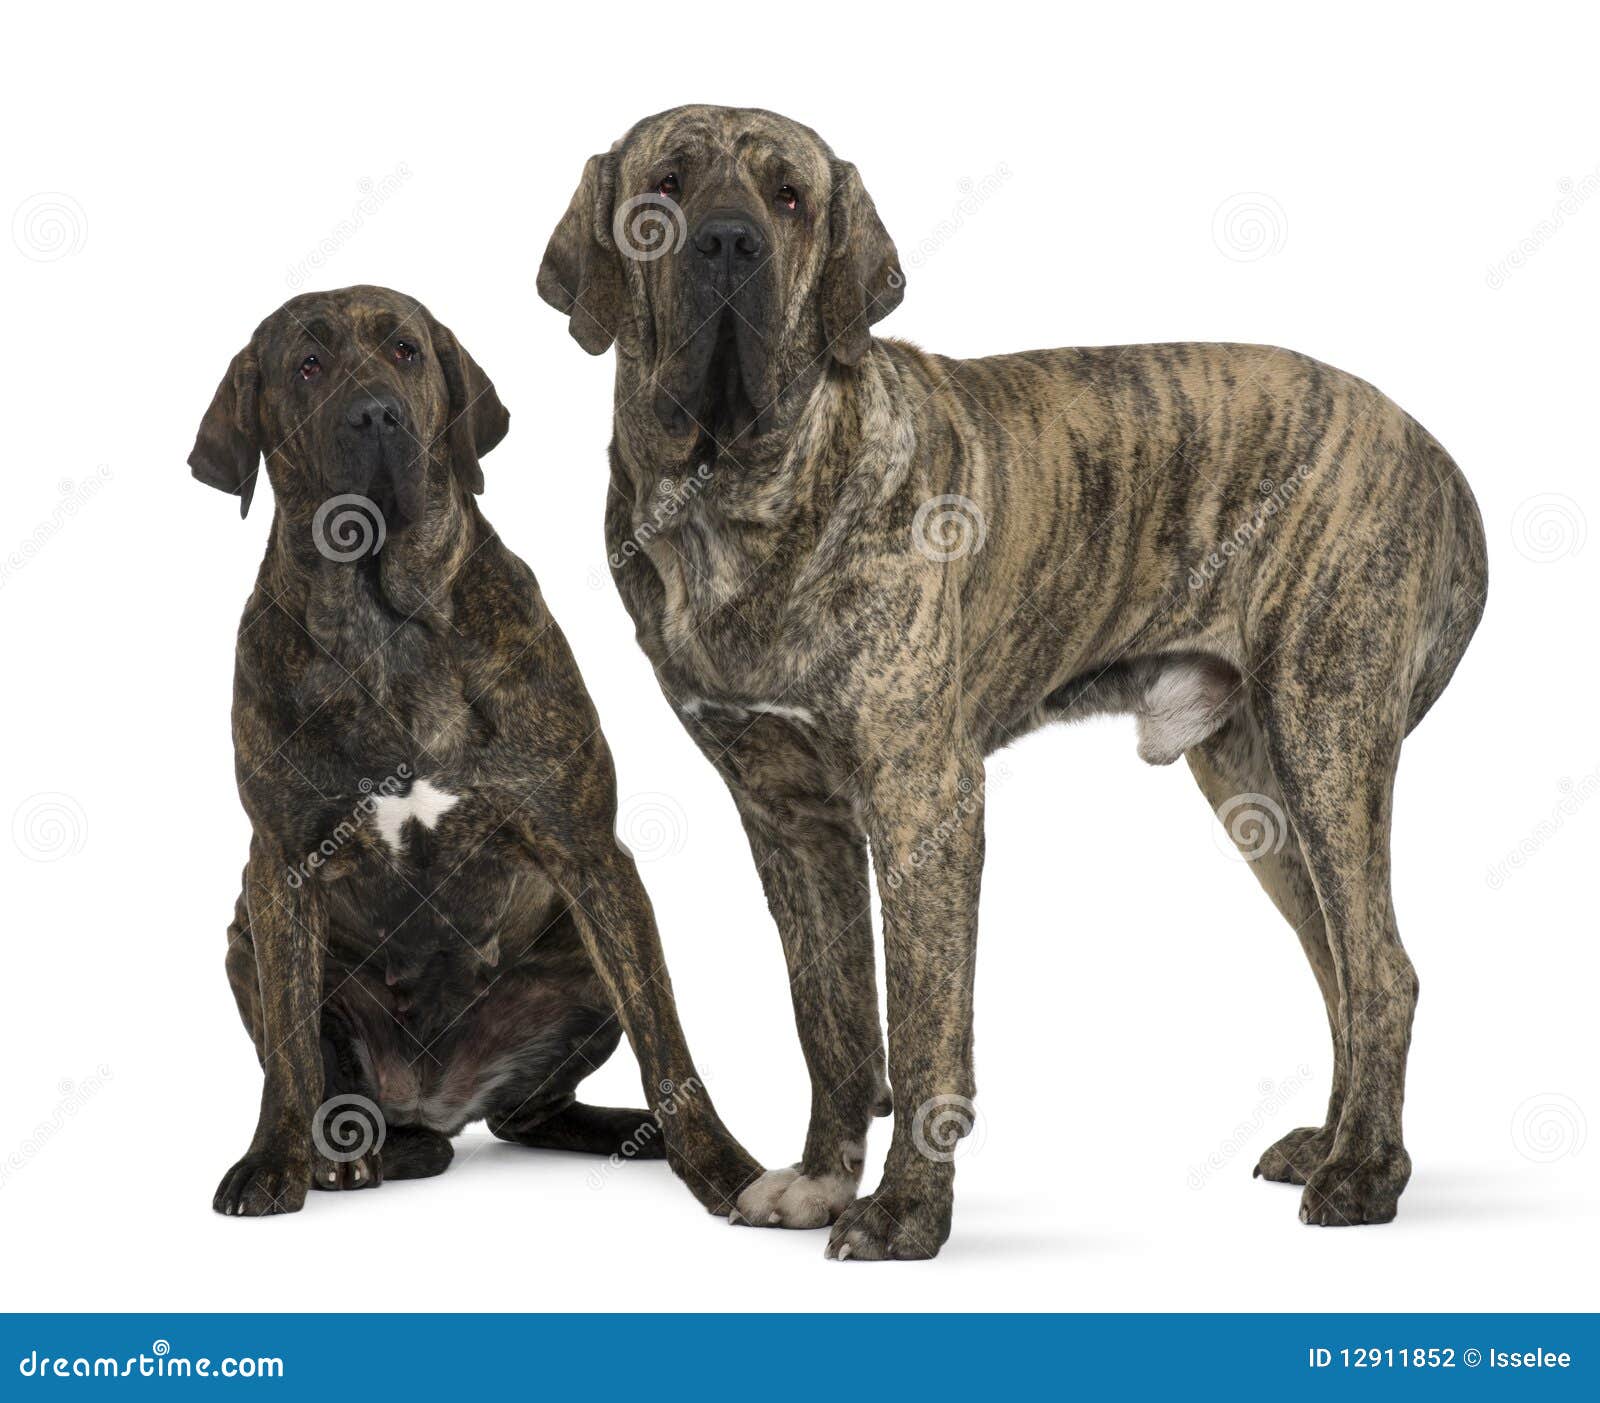 Mastiff or Fila Brasileiro Dog Stock Photo - Image of indoors, length: 12911852